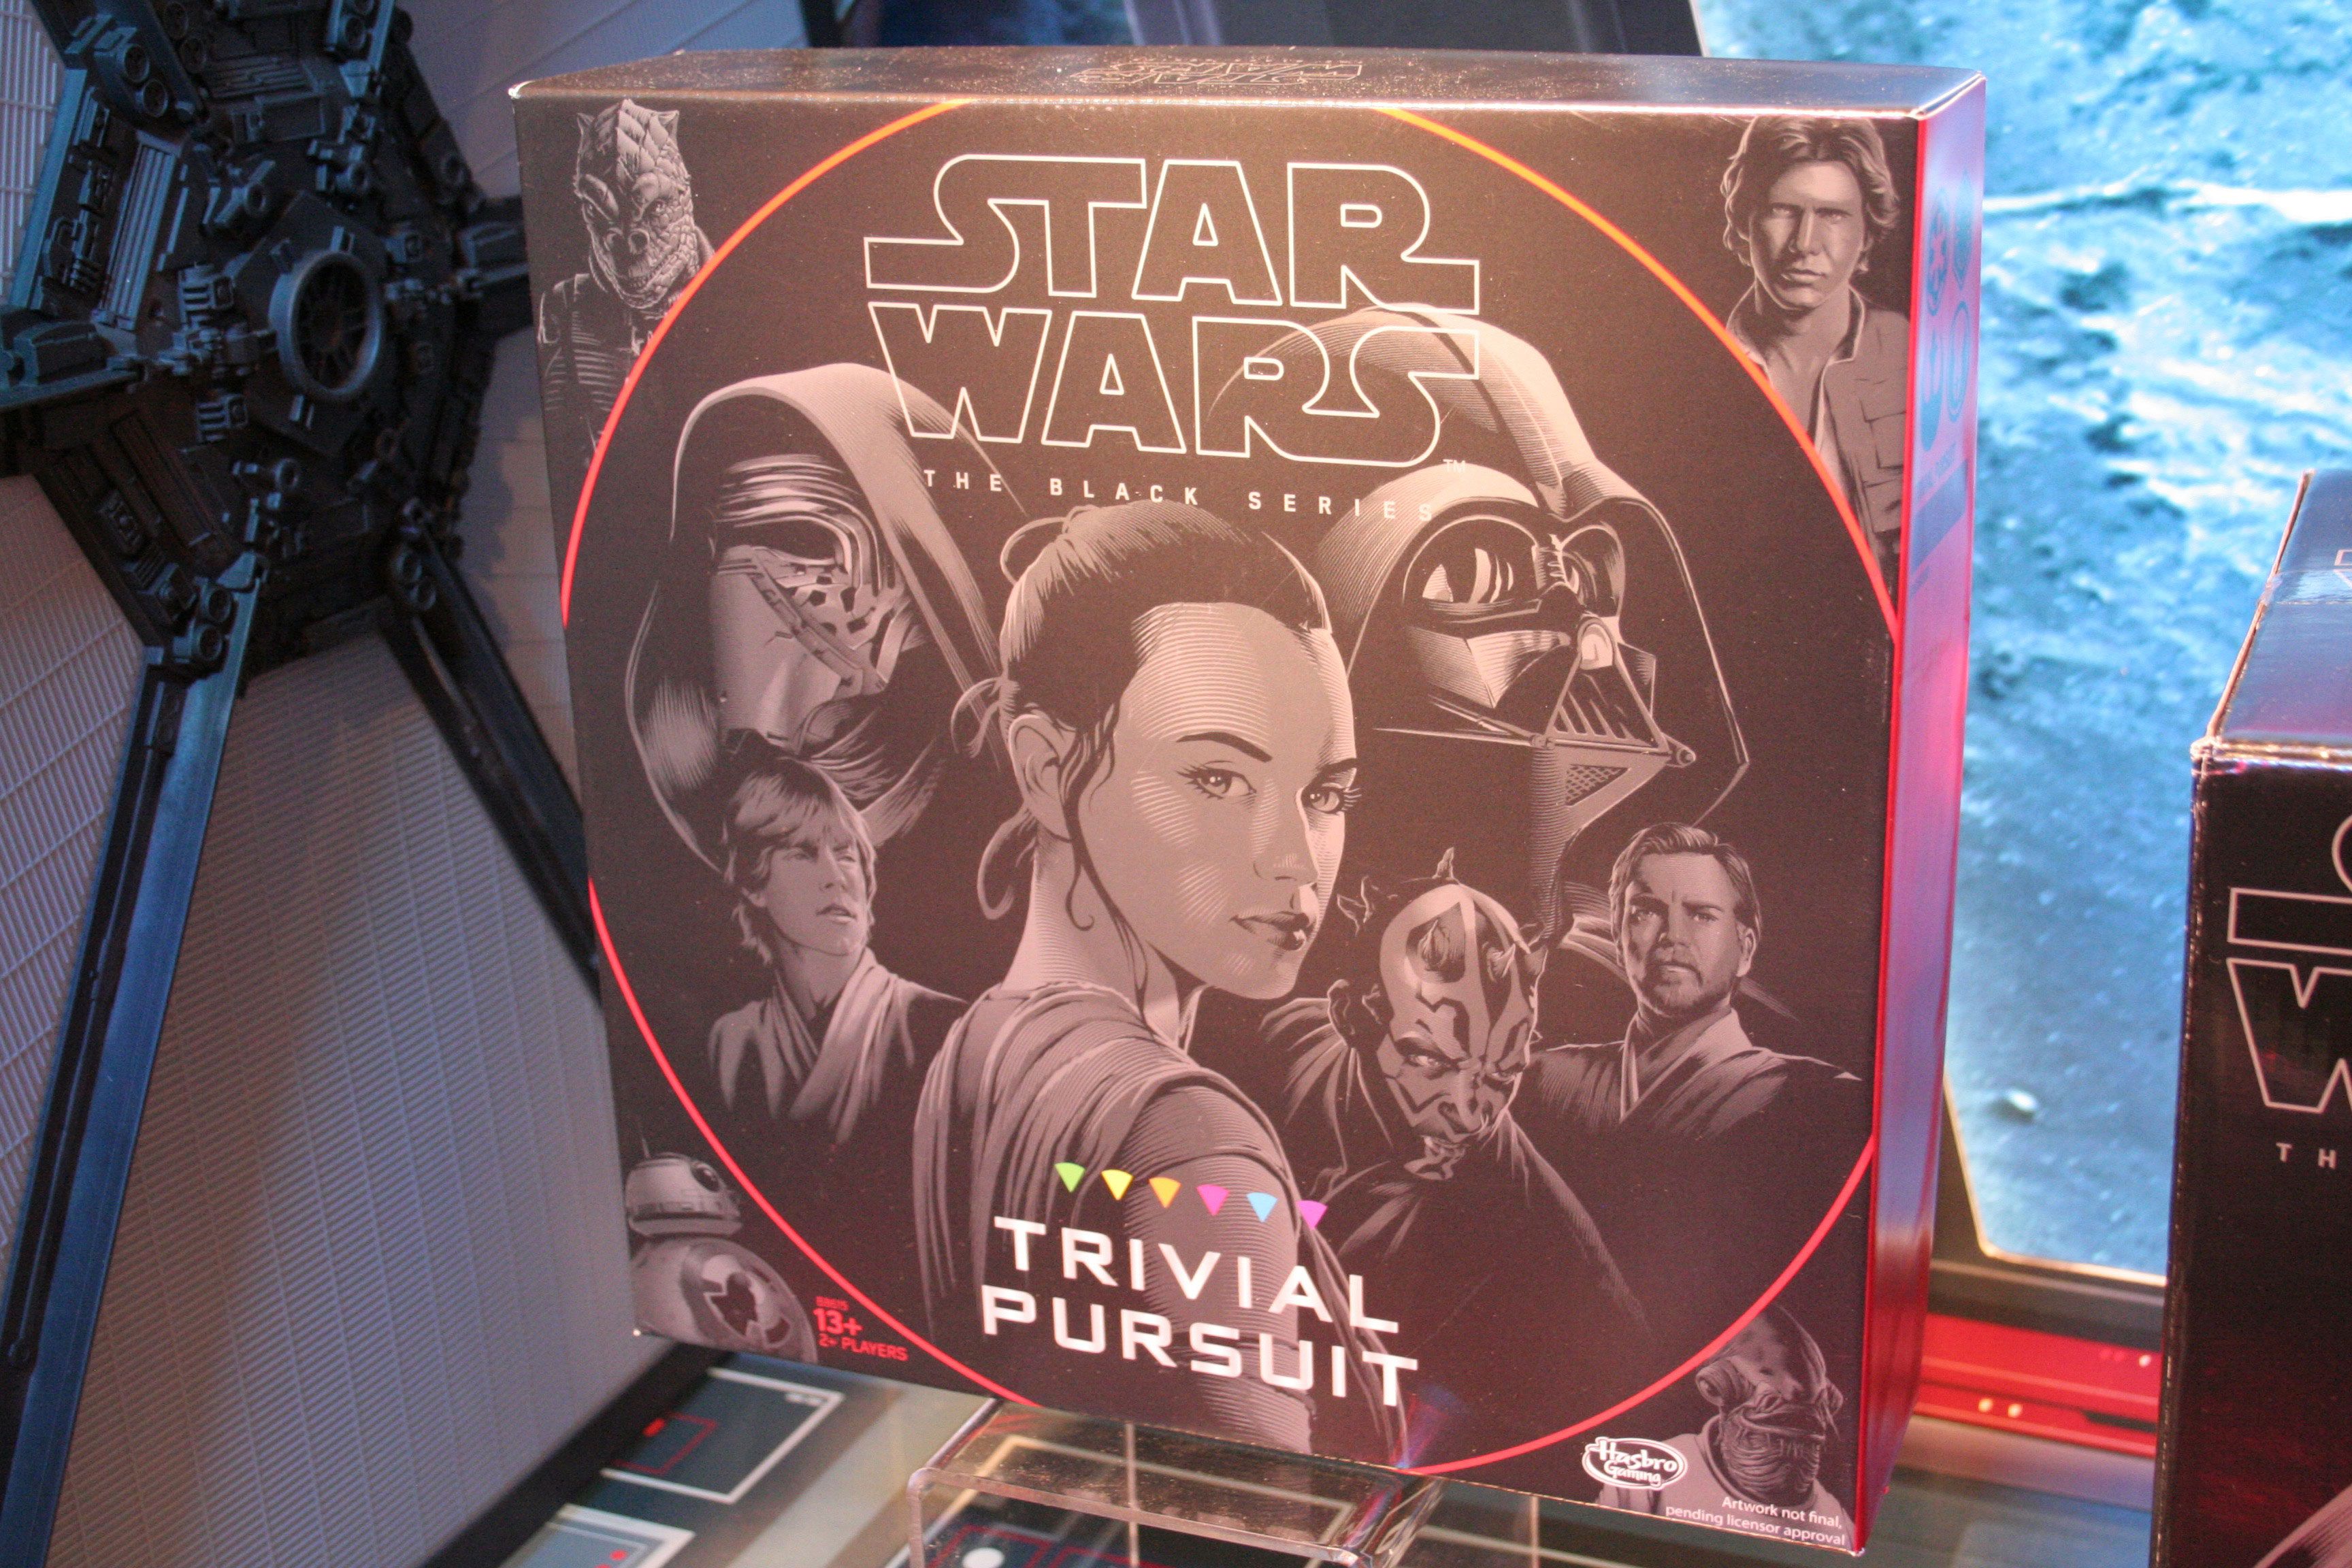 Star Wars Trivial Pursuit